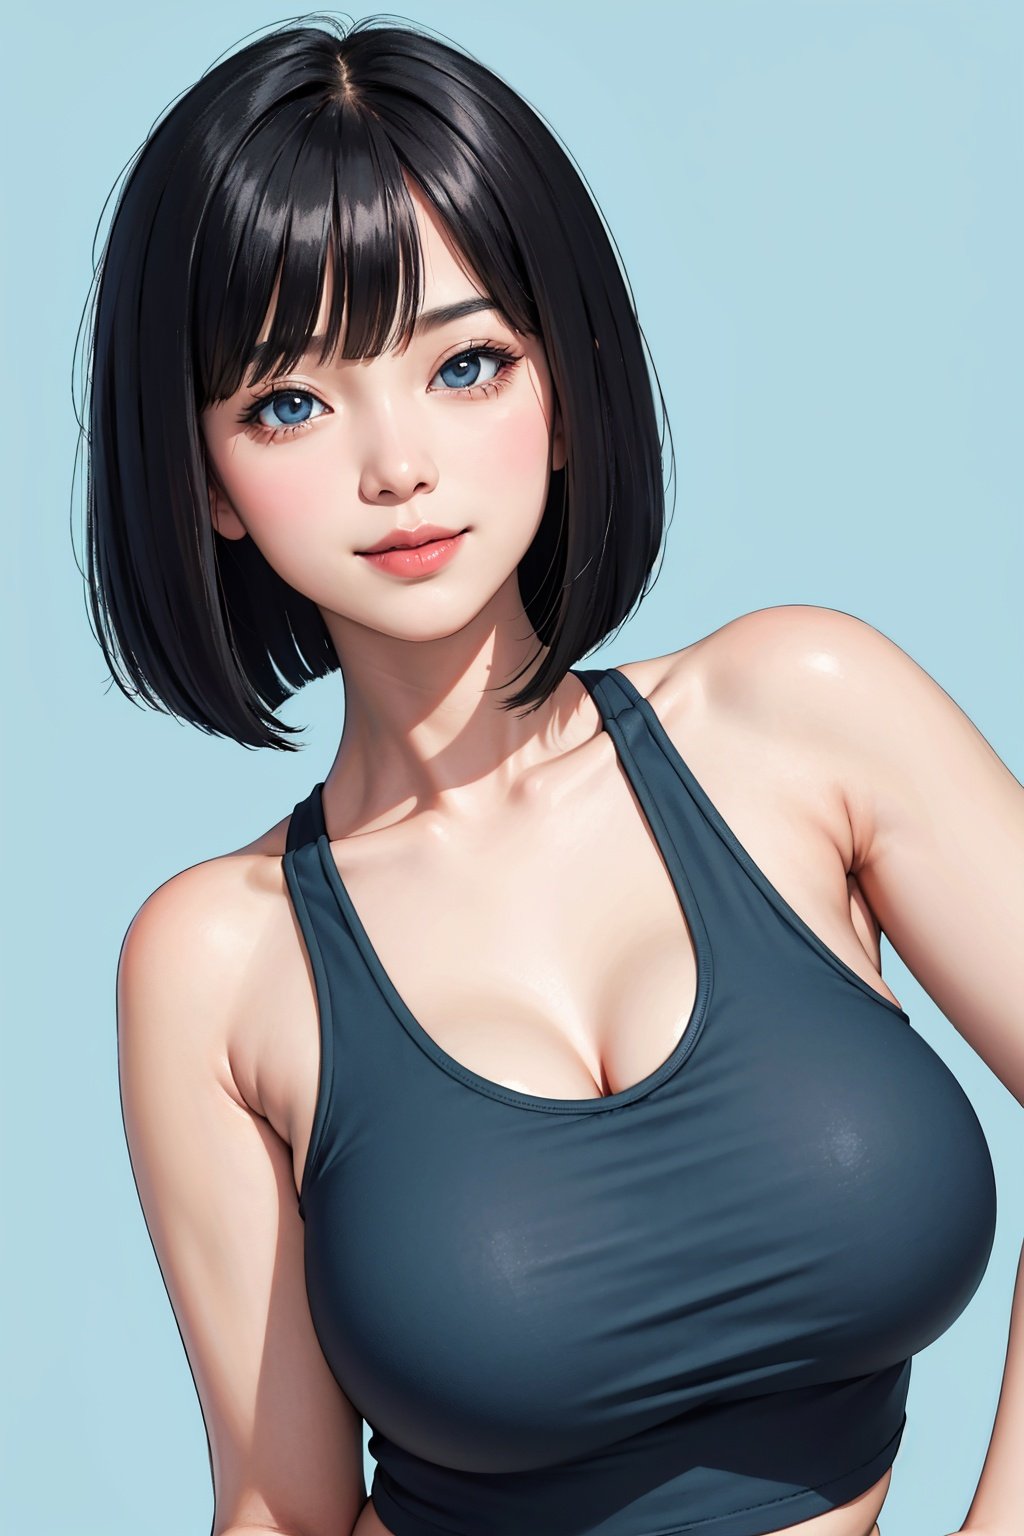 asian woman, bob cut, close-up, smile, large breast, (black tank top), (pastel blue background)